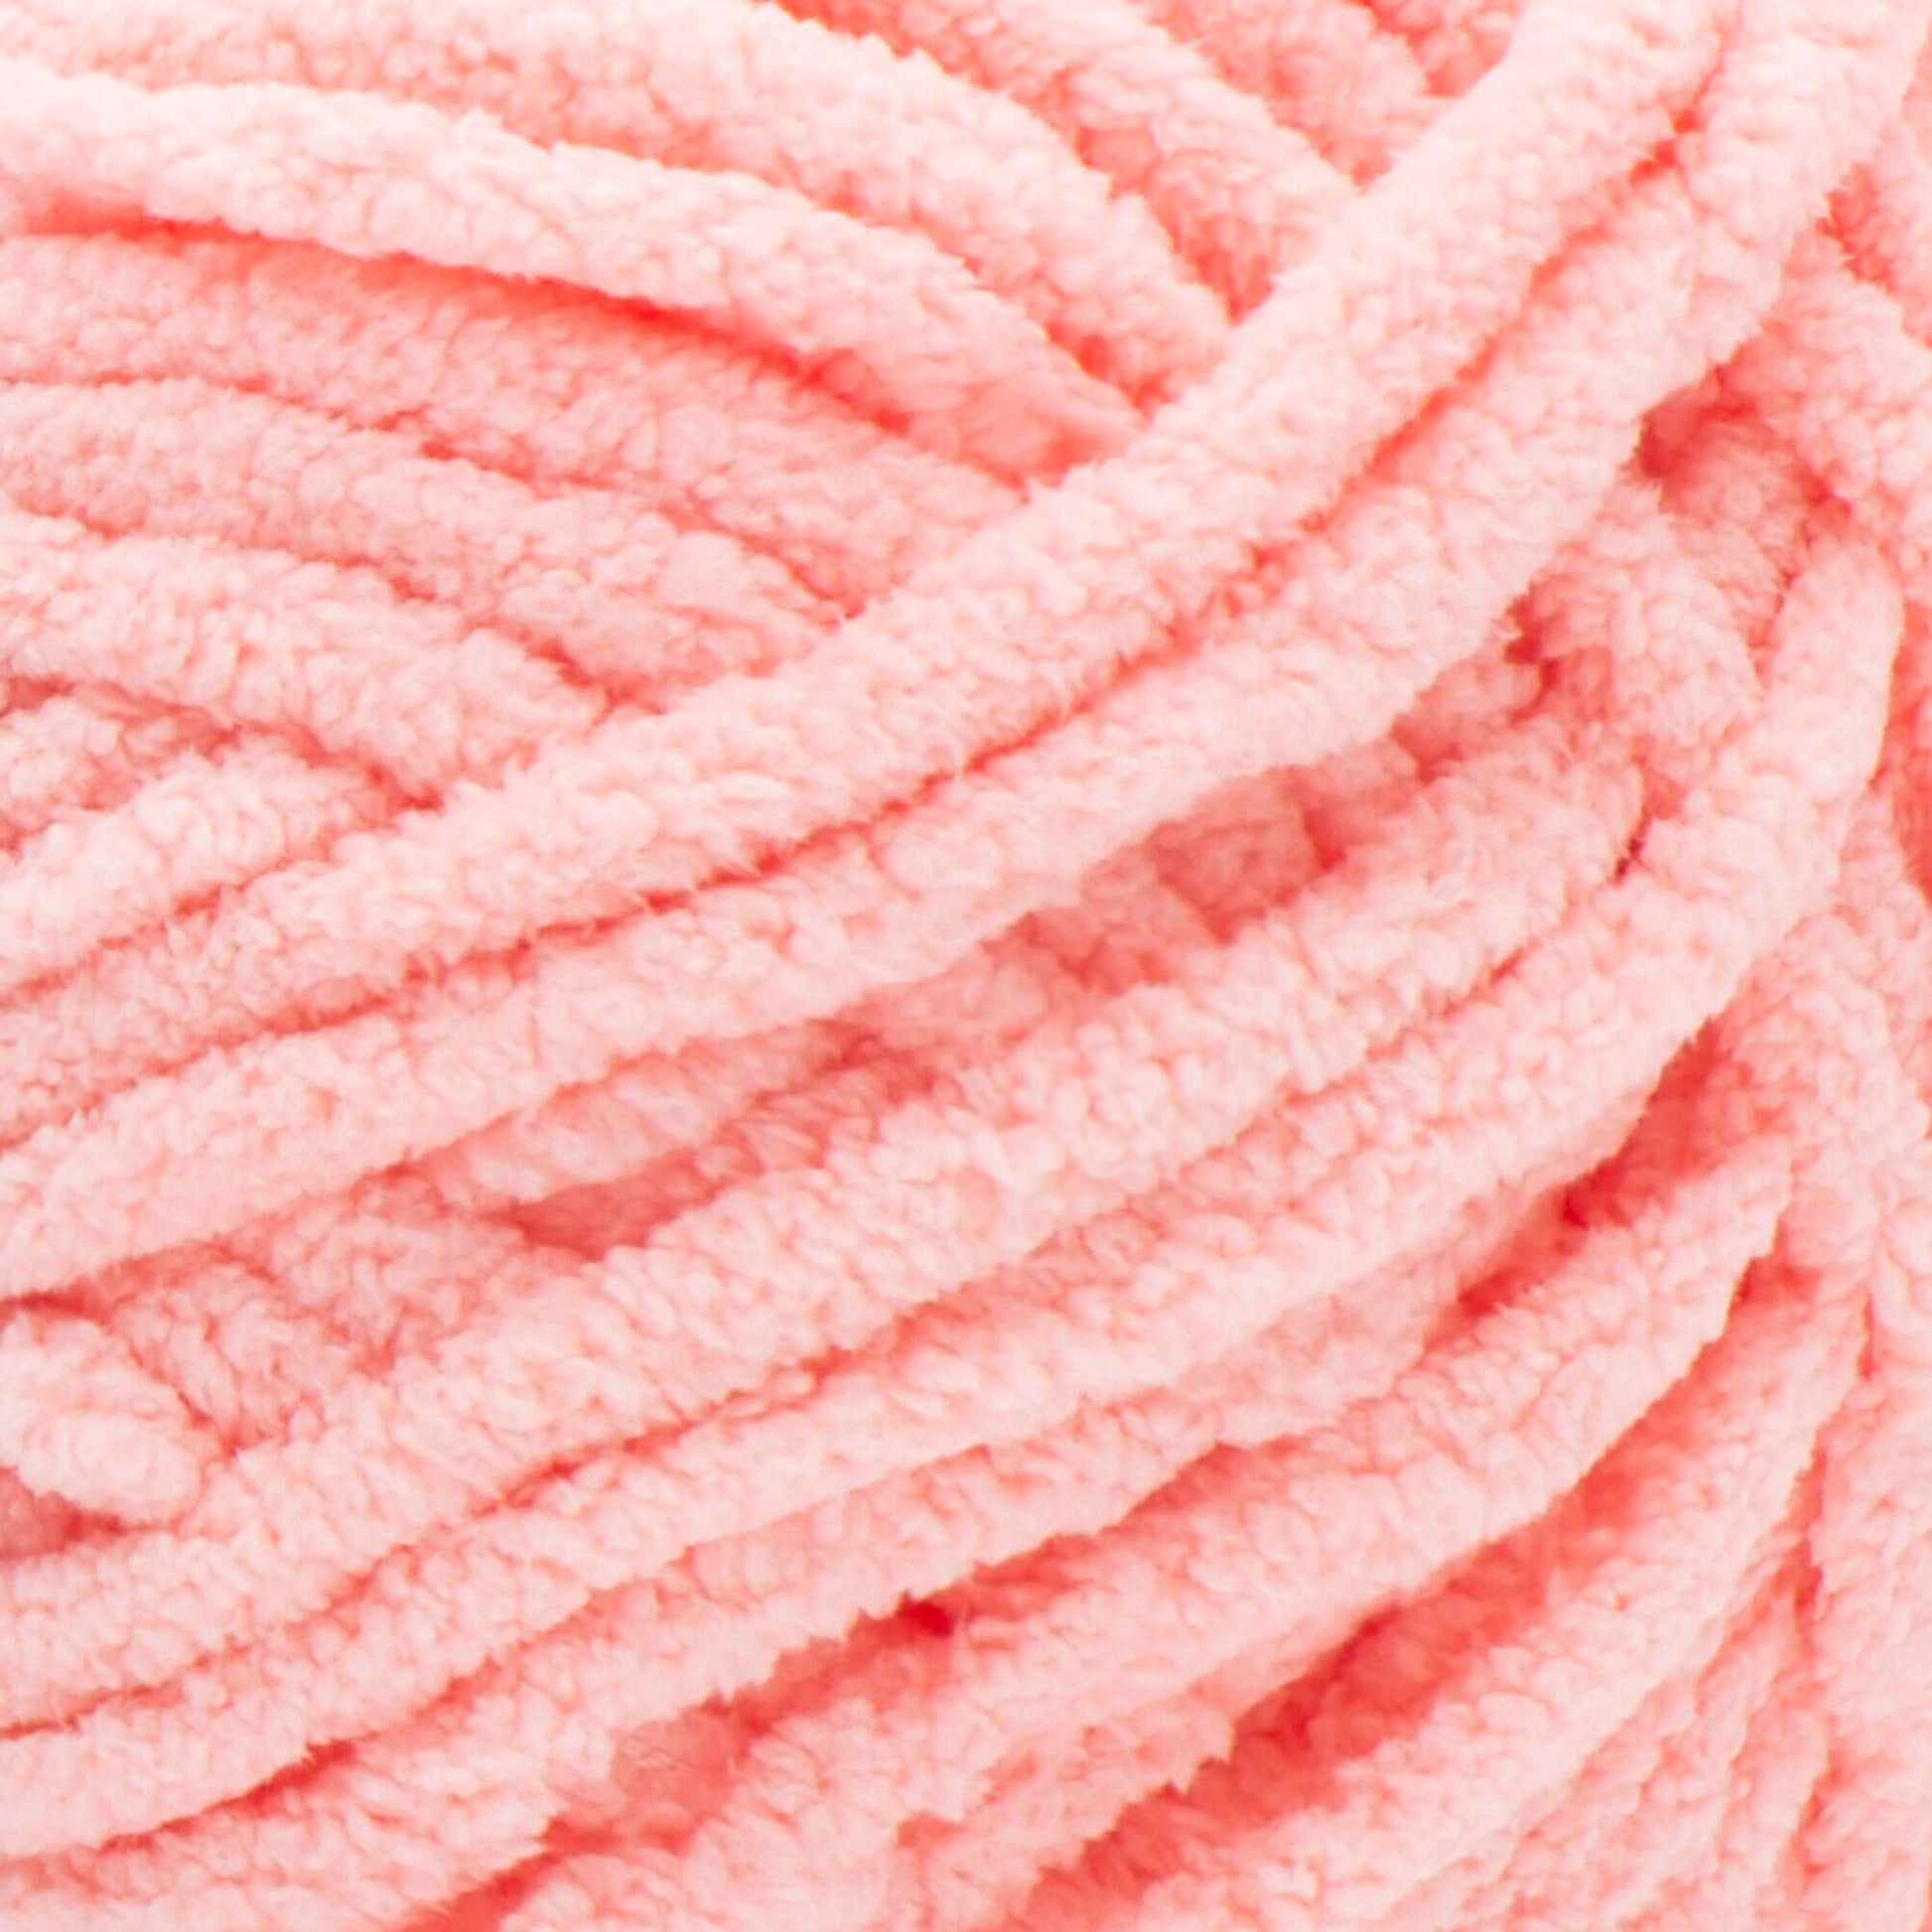 Bernat Baby Blanket Yarn (300g/10.5oz) Coral Blossom